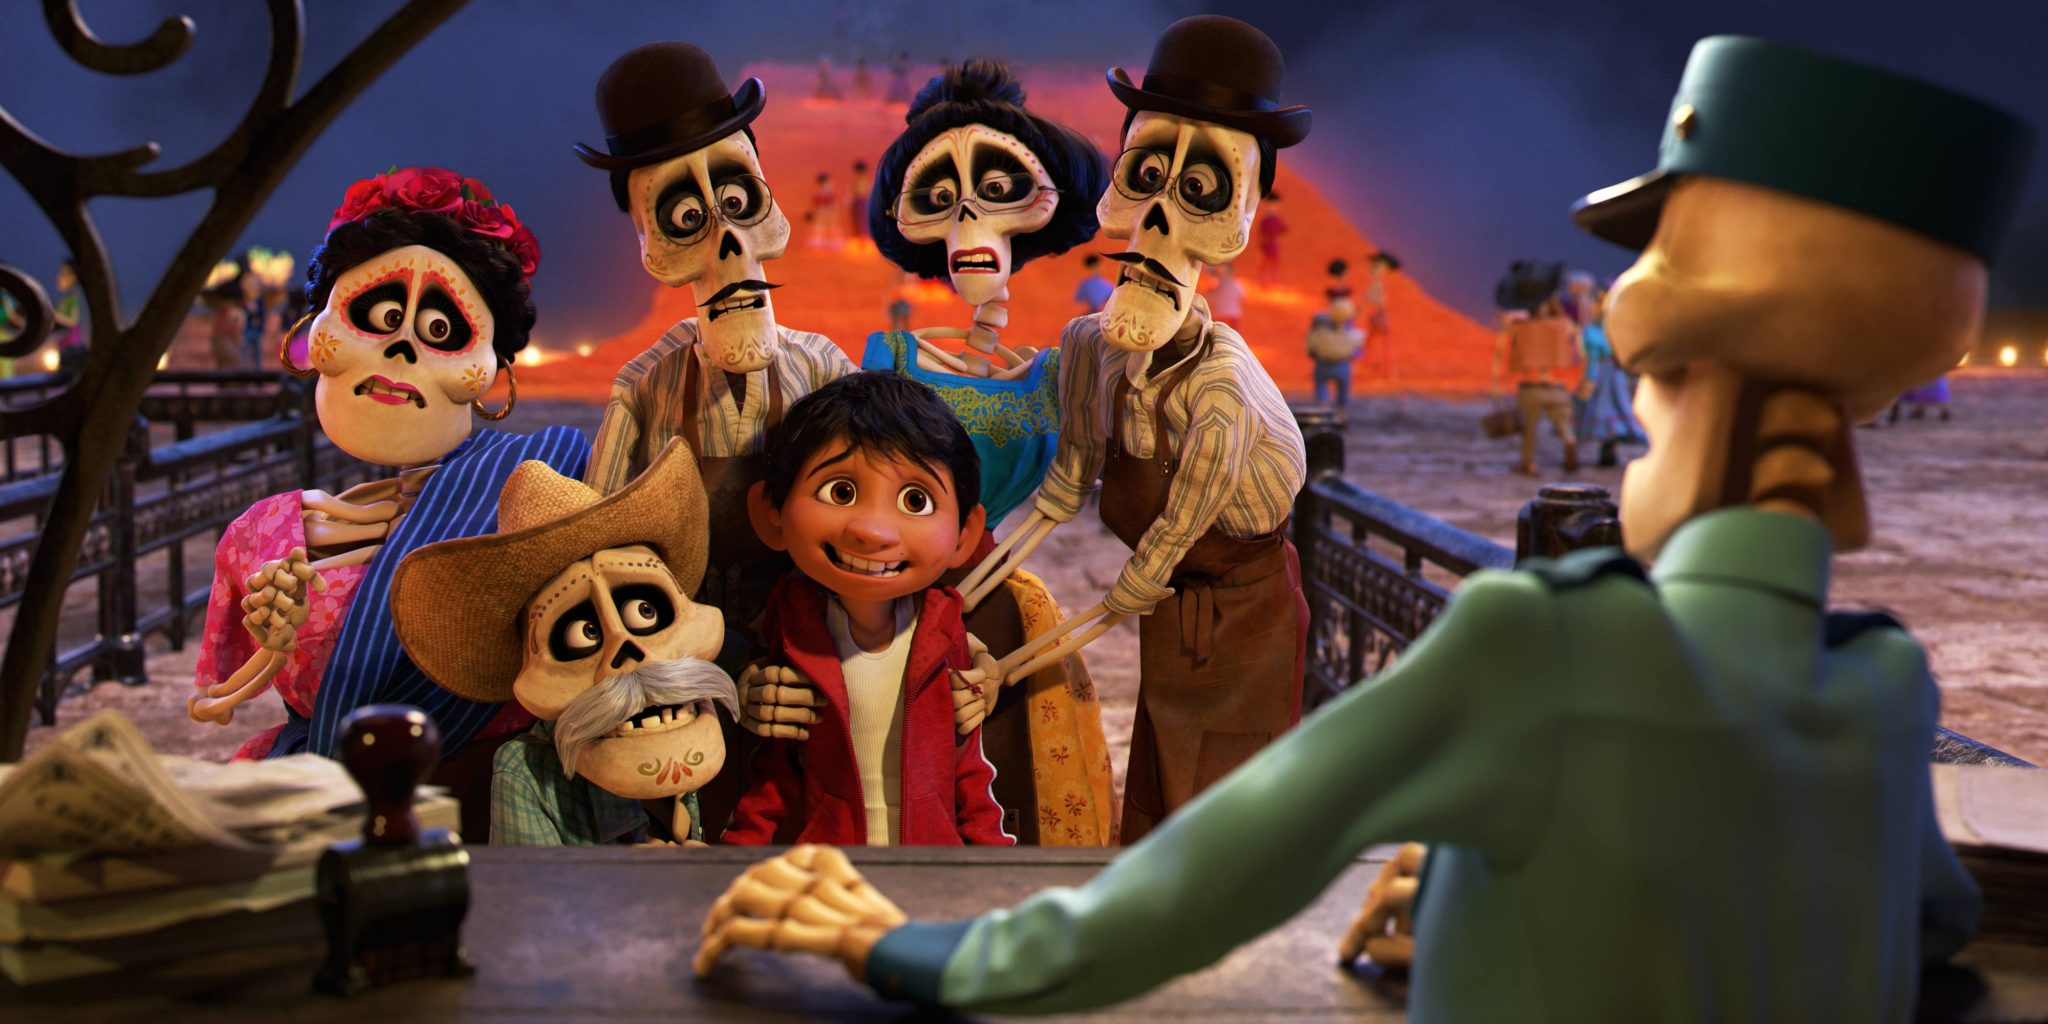 New Coco Trailer from Disney-Pixar